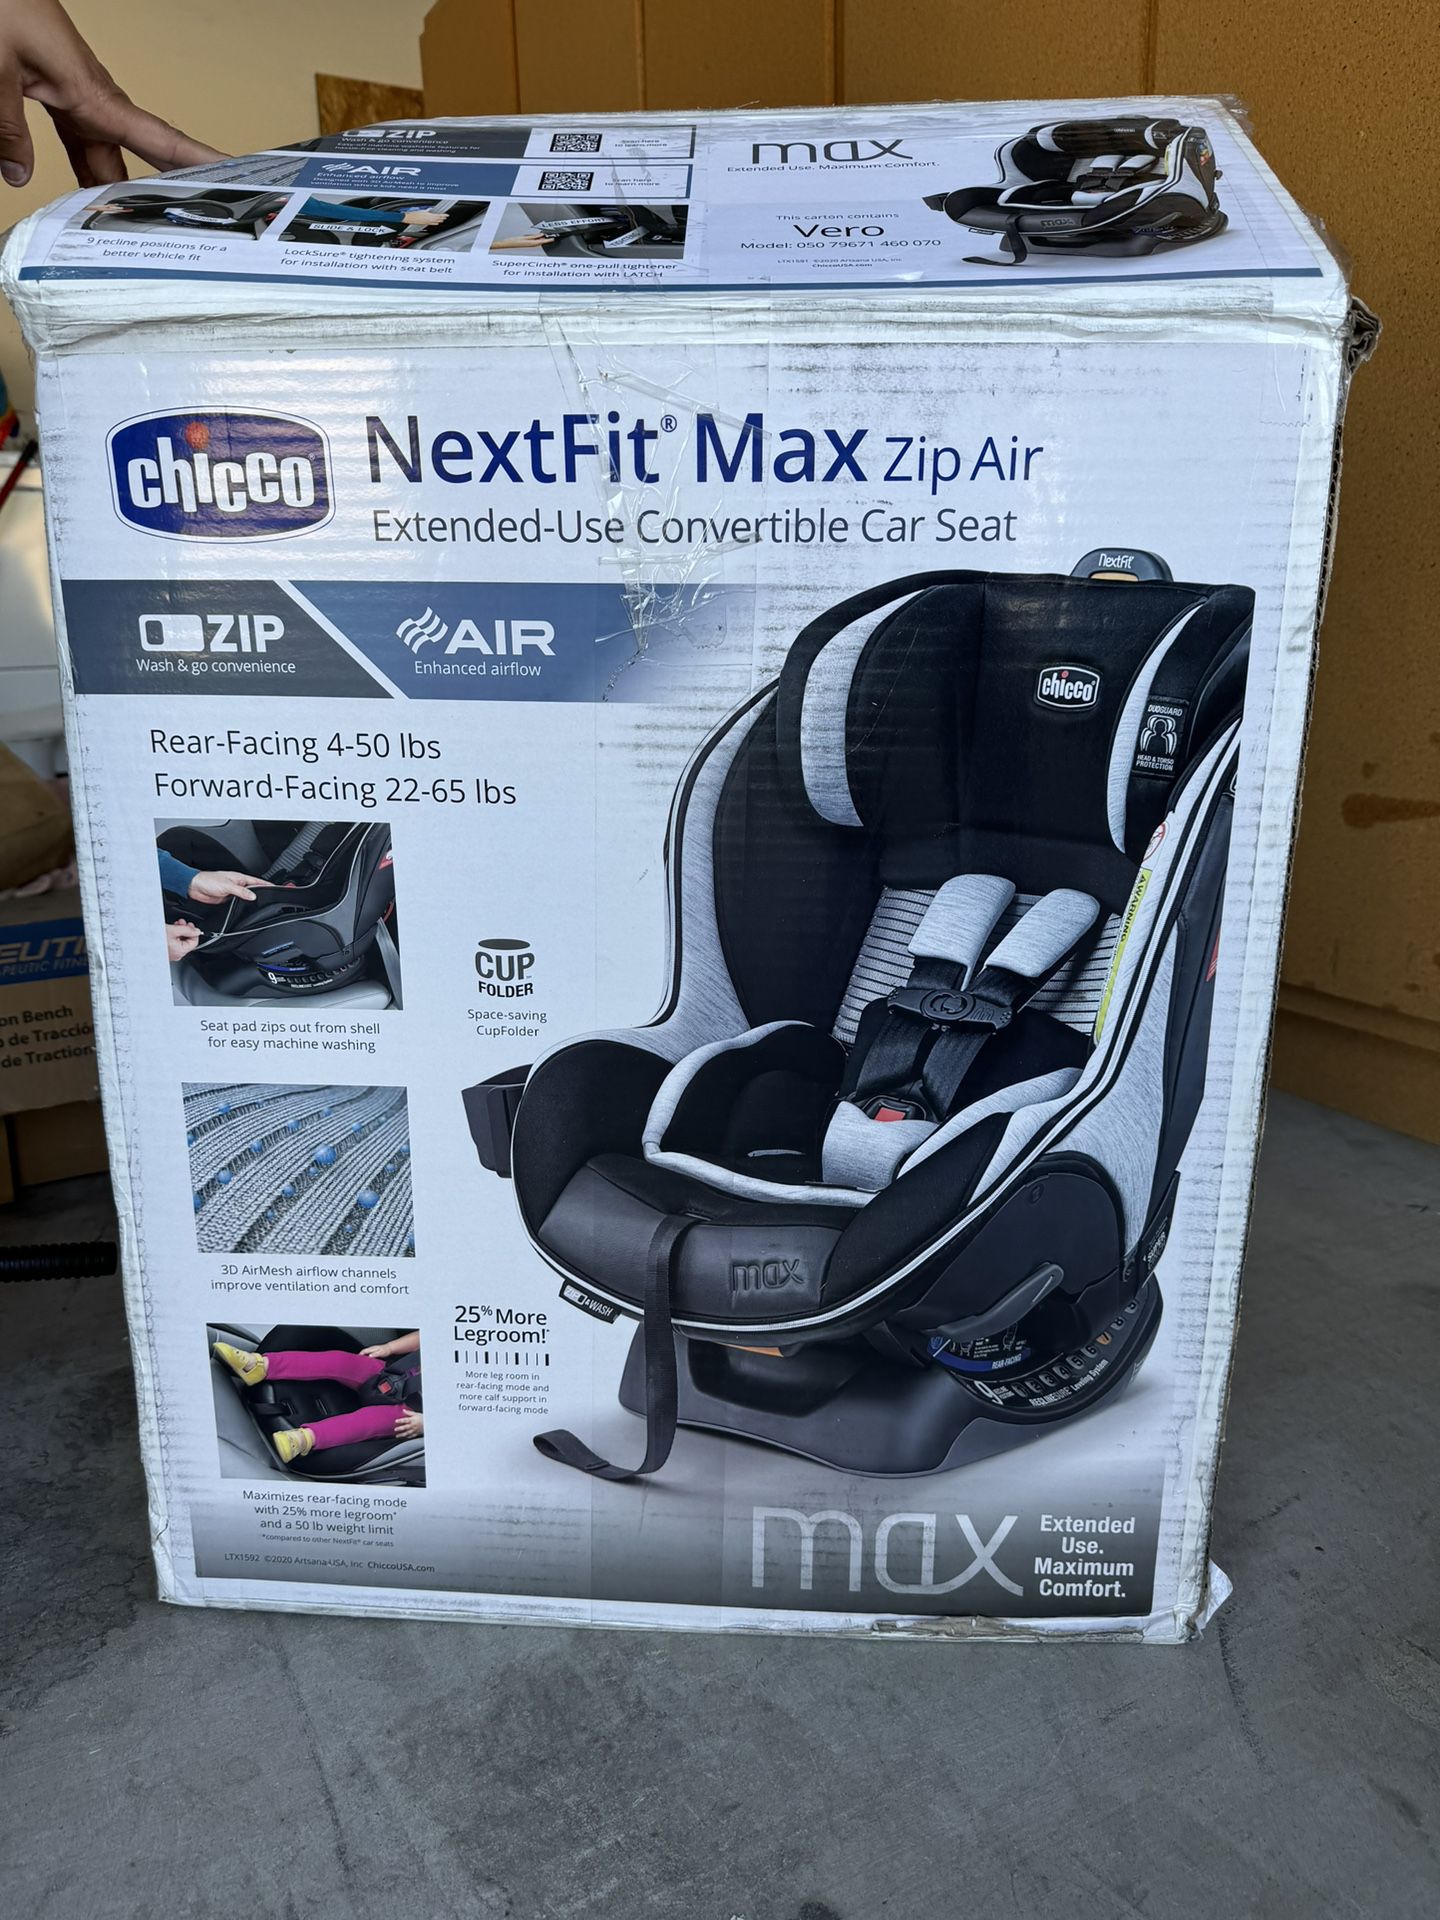 Chicco NextFit Max Zip Air Convertible Car Seat